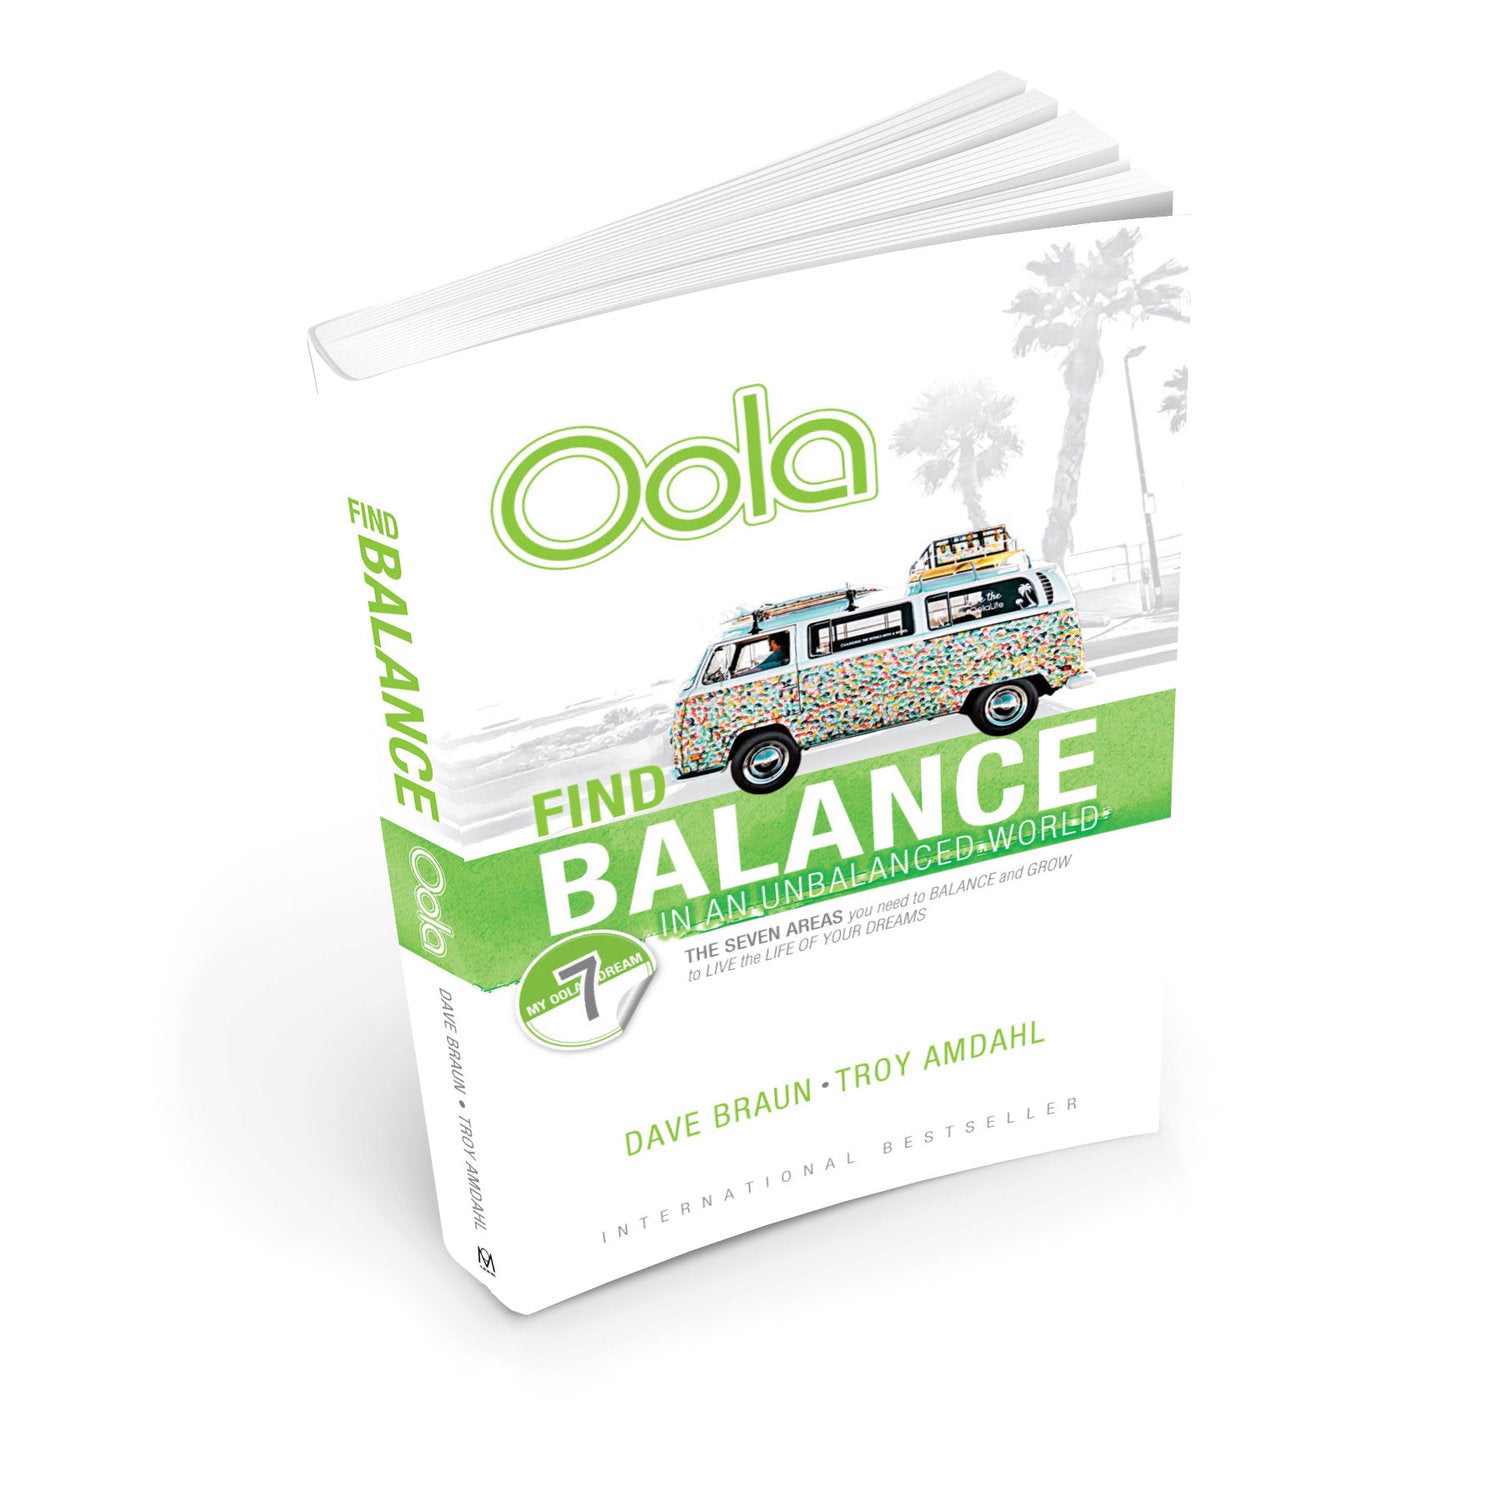 Oola: Find Balance in an Unbalanced World (20 book bundle)